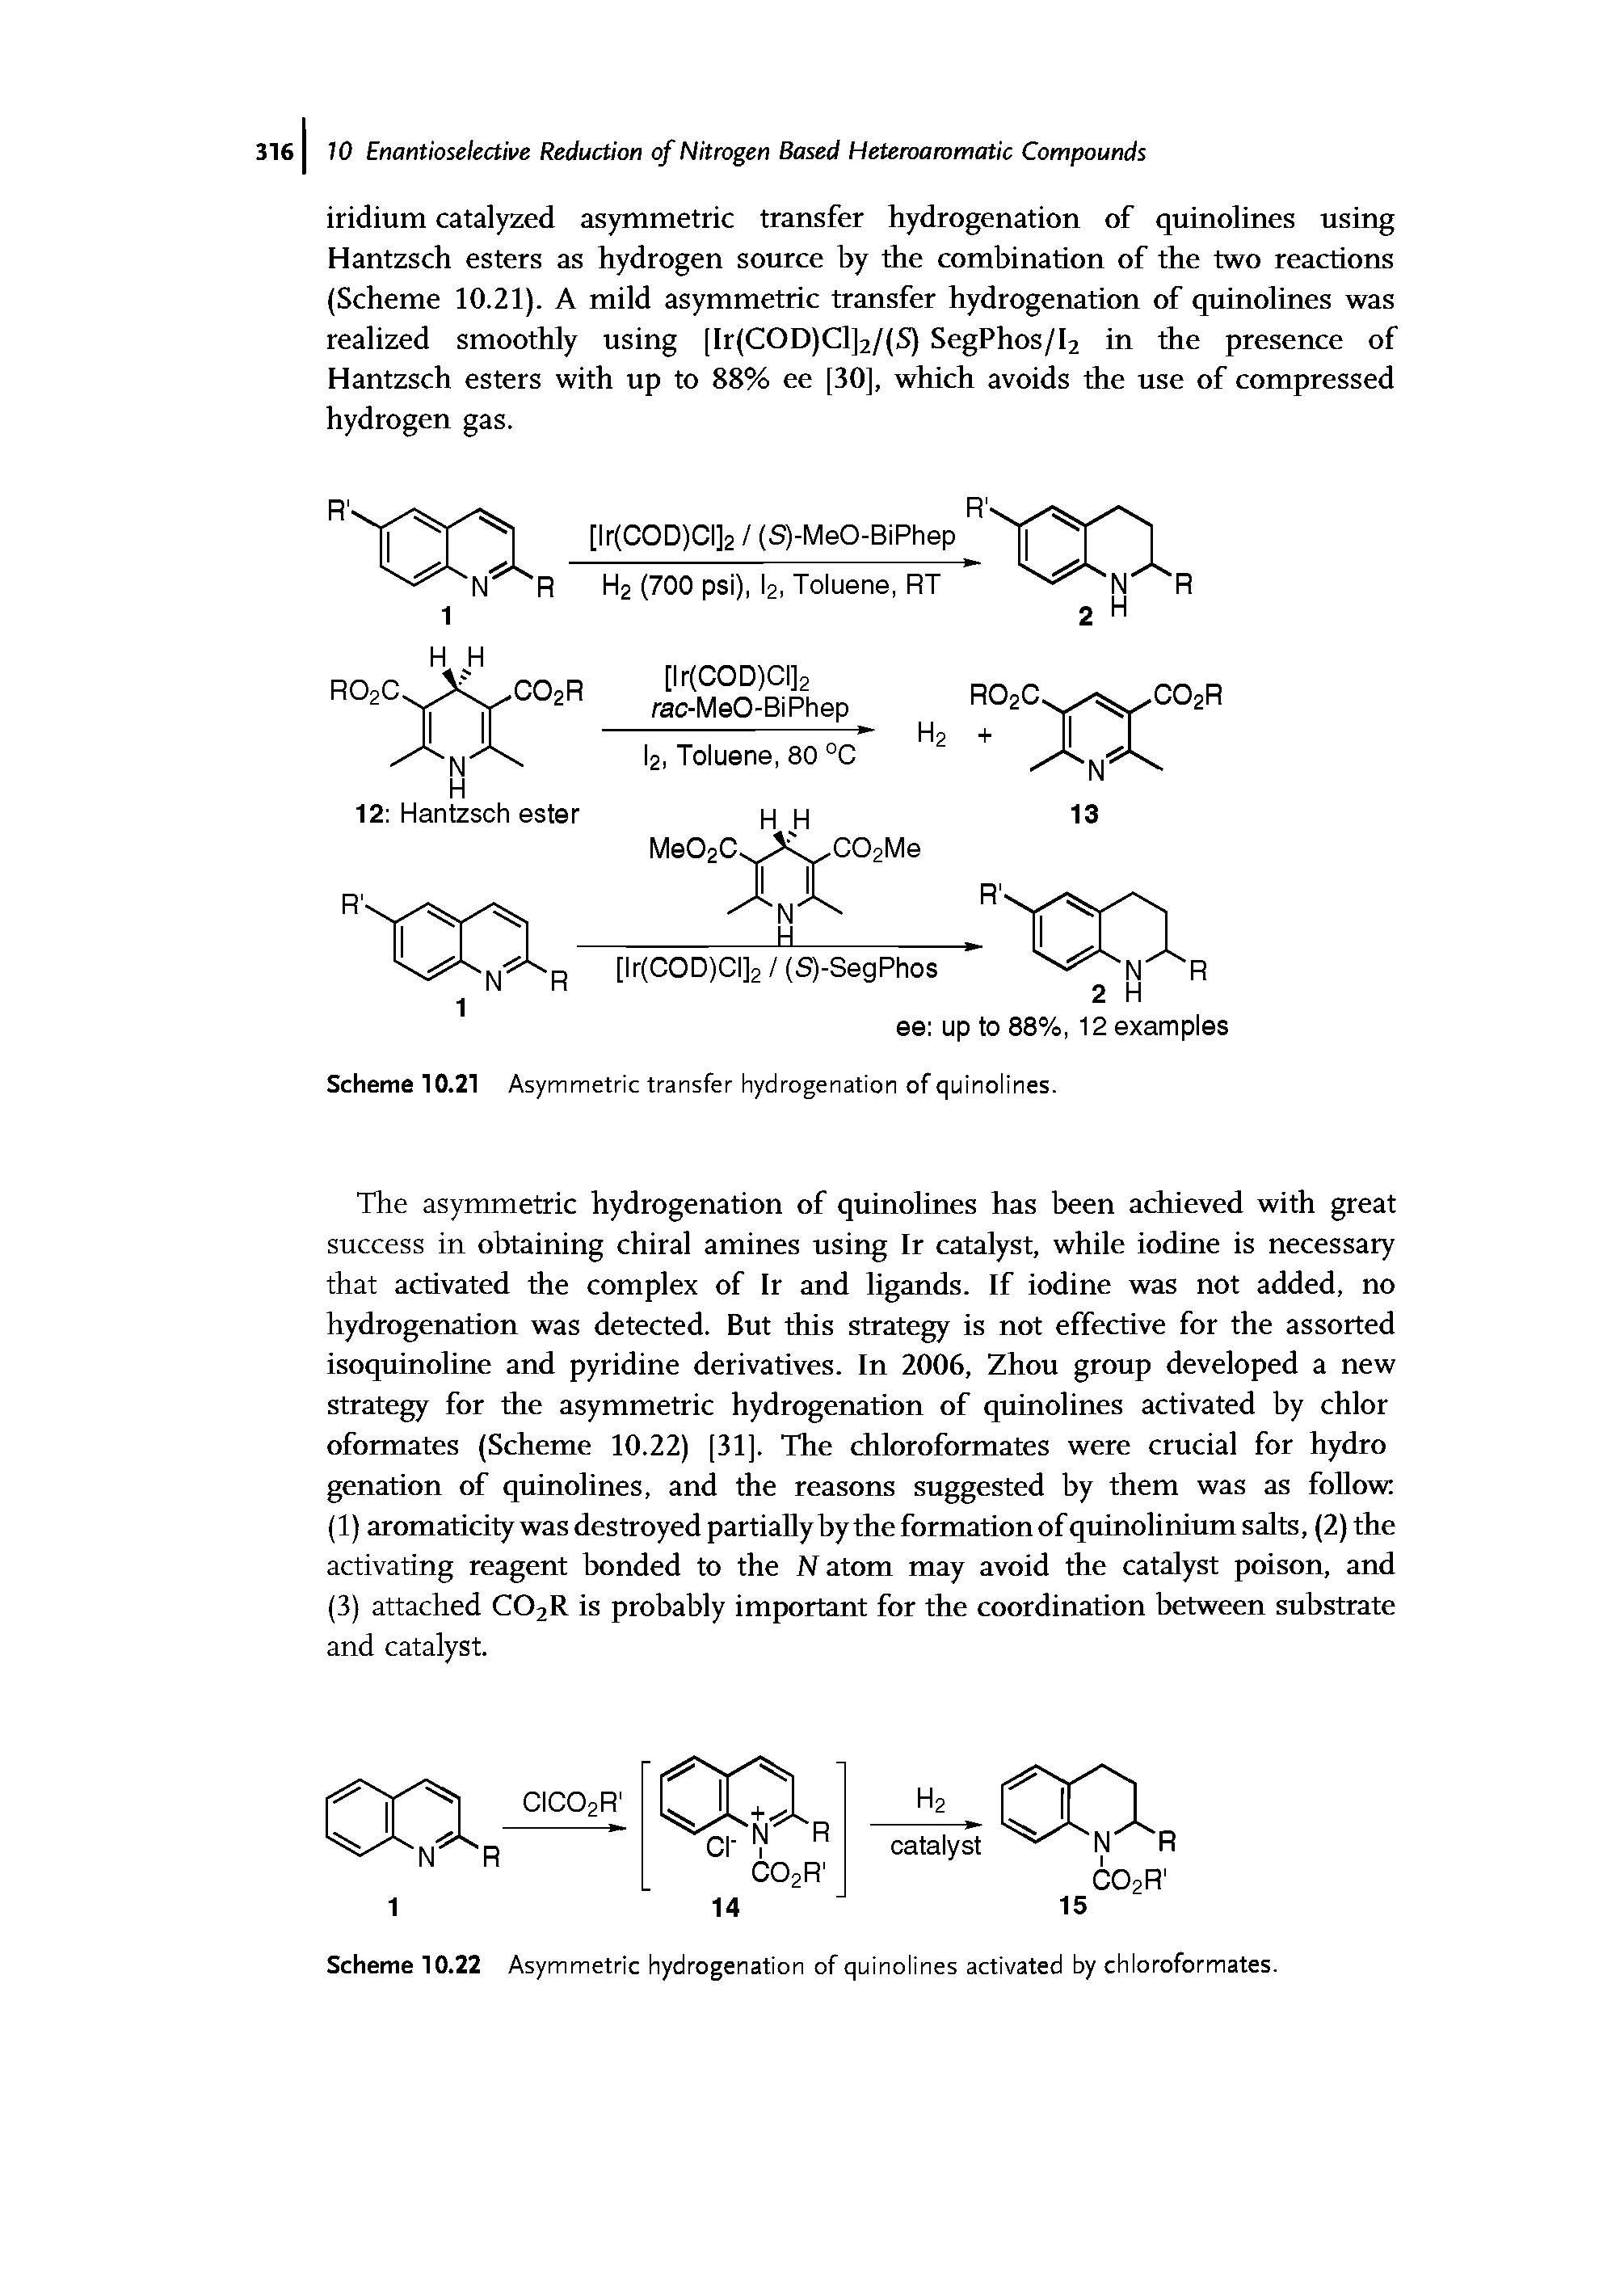 Scheme 10.22 Asymmetric hydrogenation of quinolines activated by chloroformates.